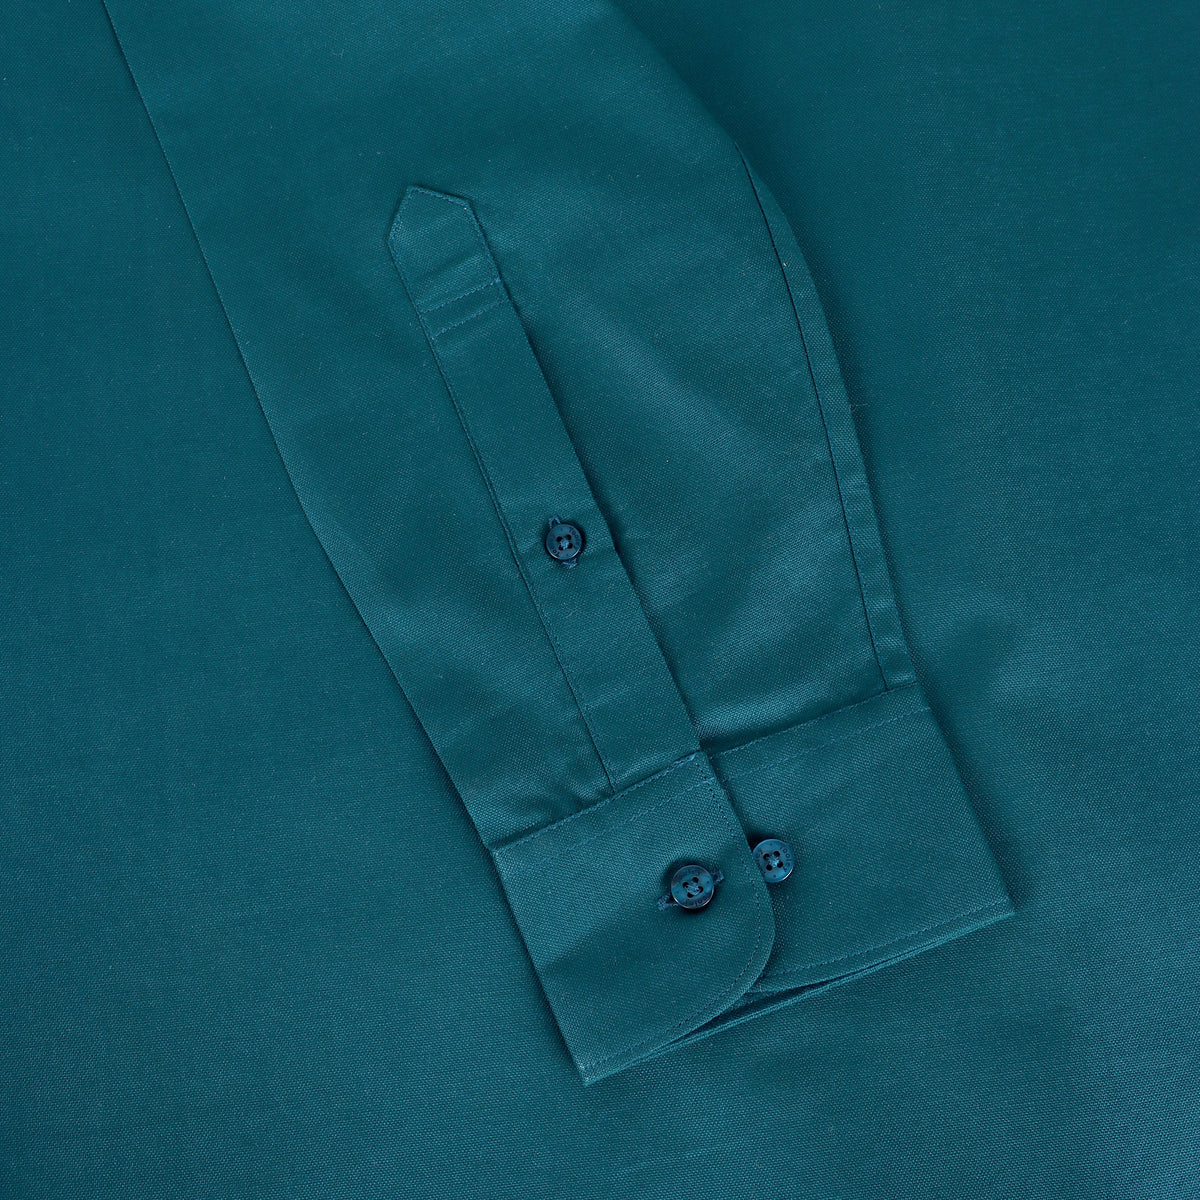 A-Prussian Blue Premium Oxford Cotton Formal Shirt Code-1011